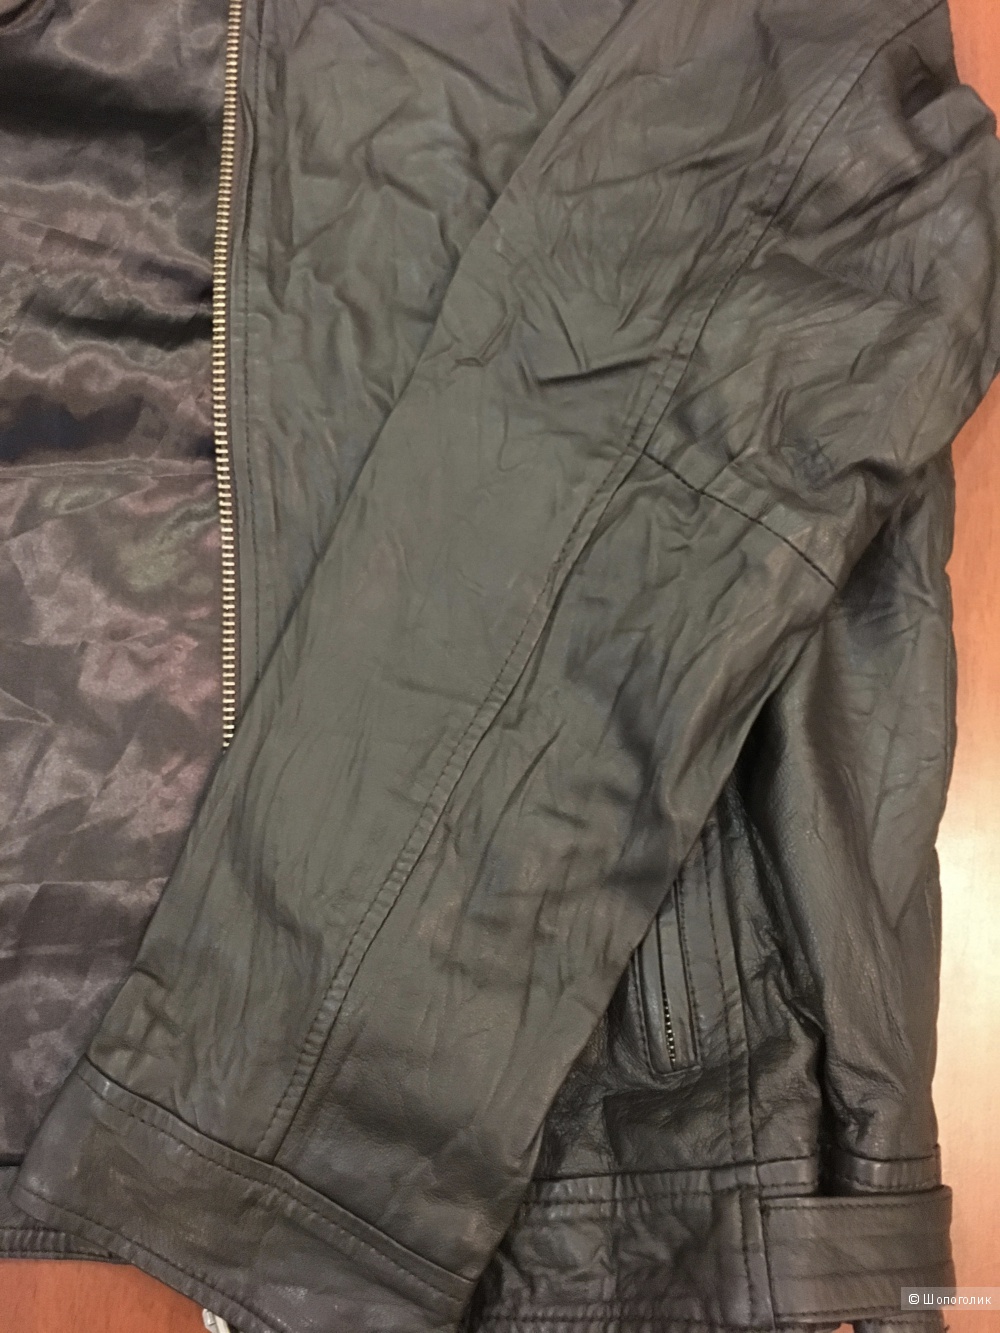 Кожаная куртка Barney's Leather Biker Jacket - Brown / L, на рос. 48-50